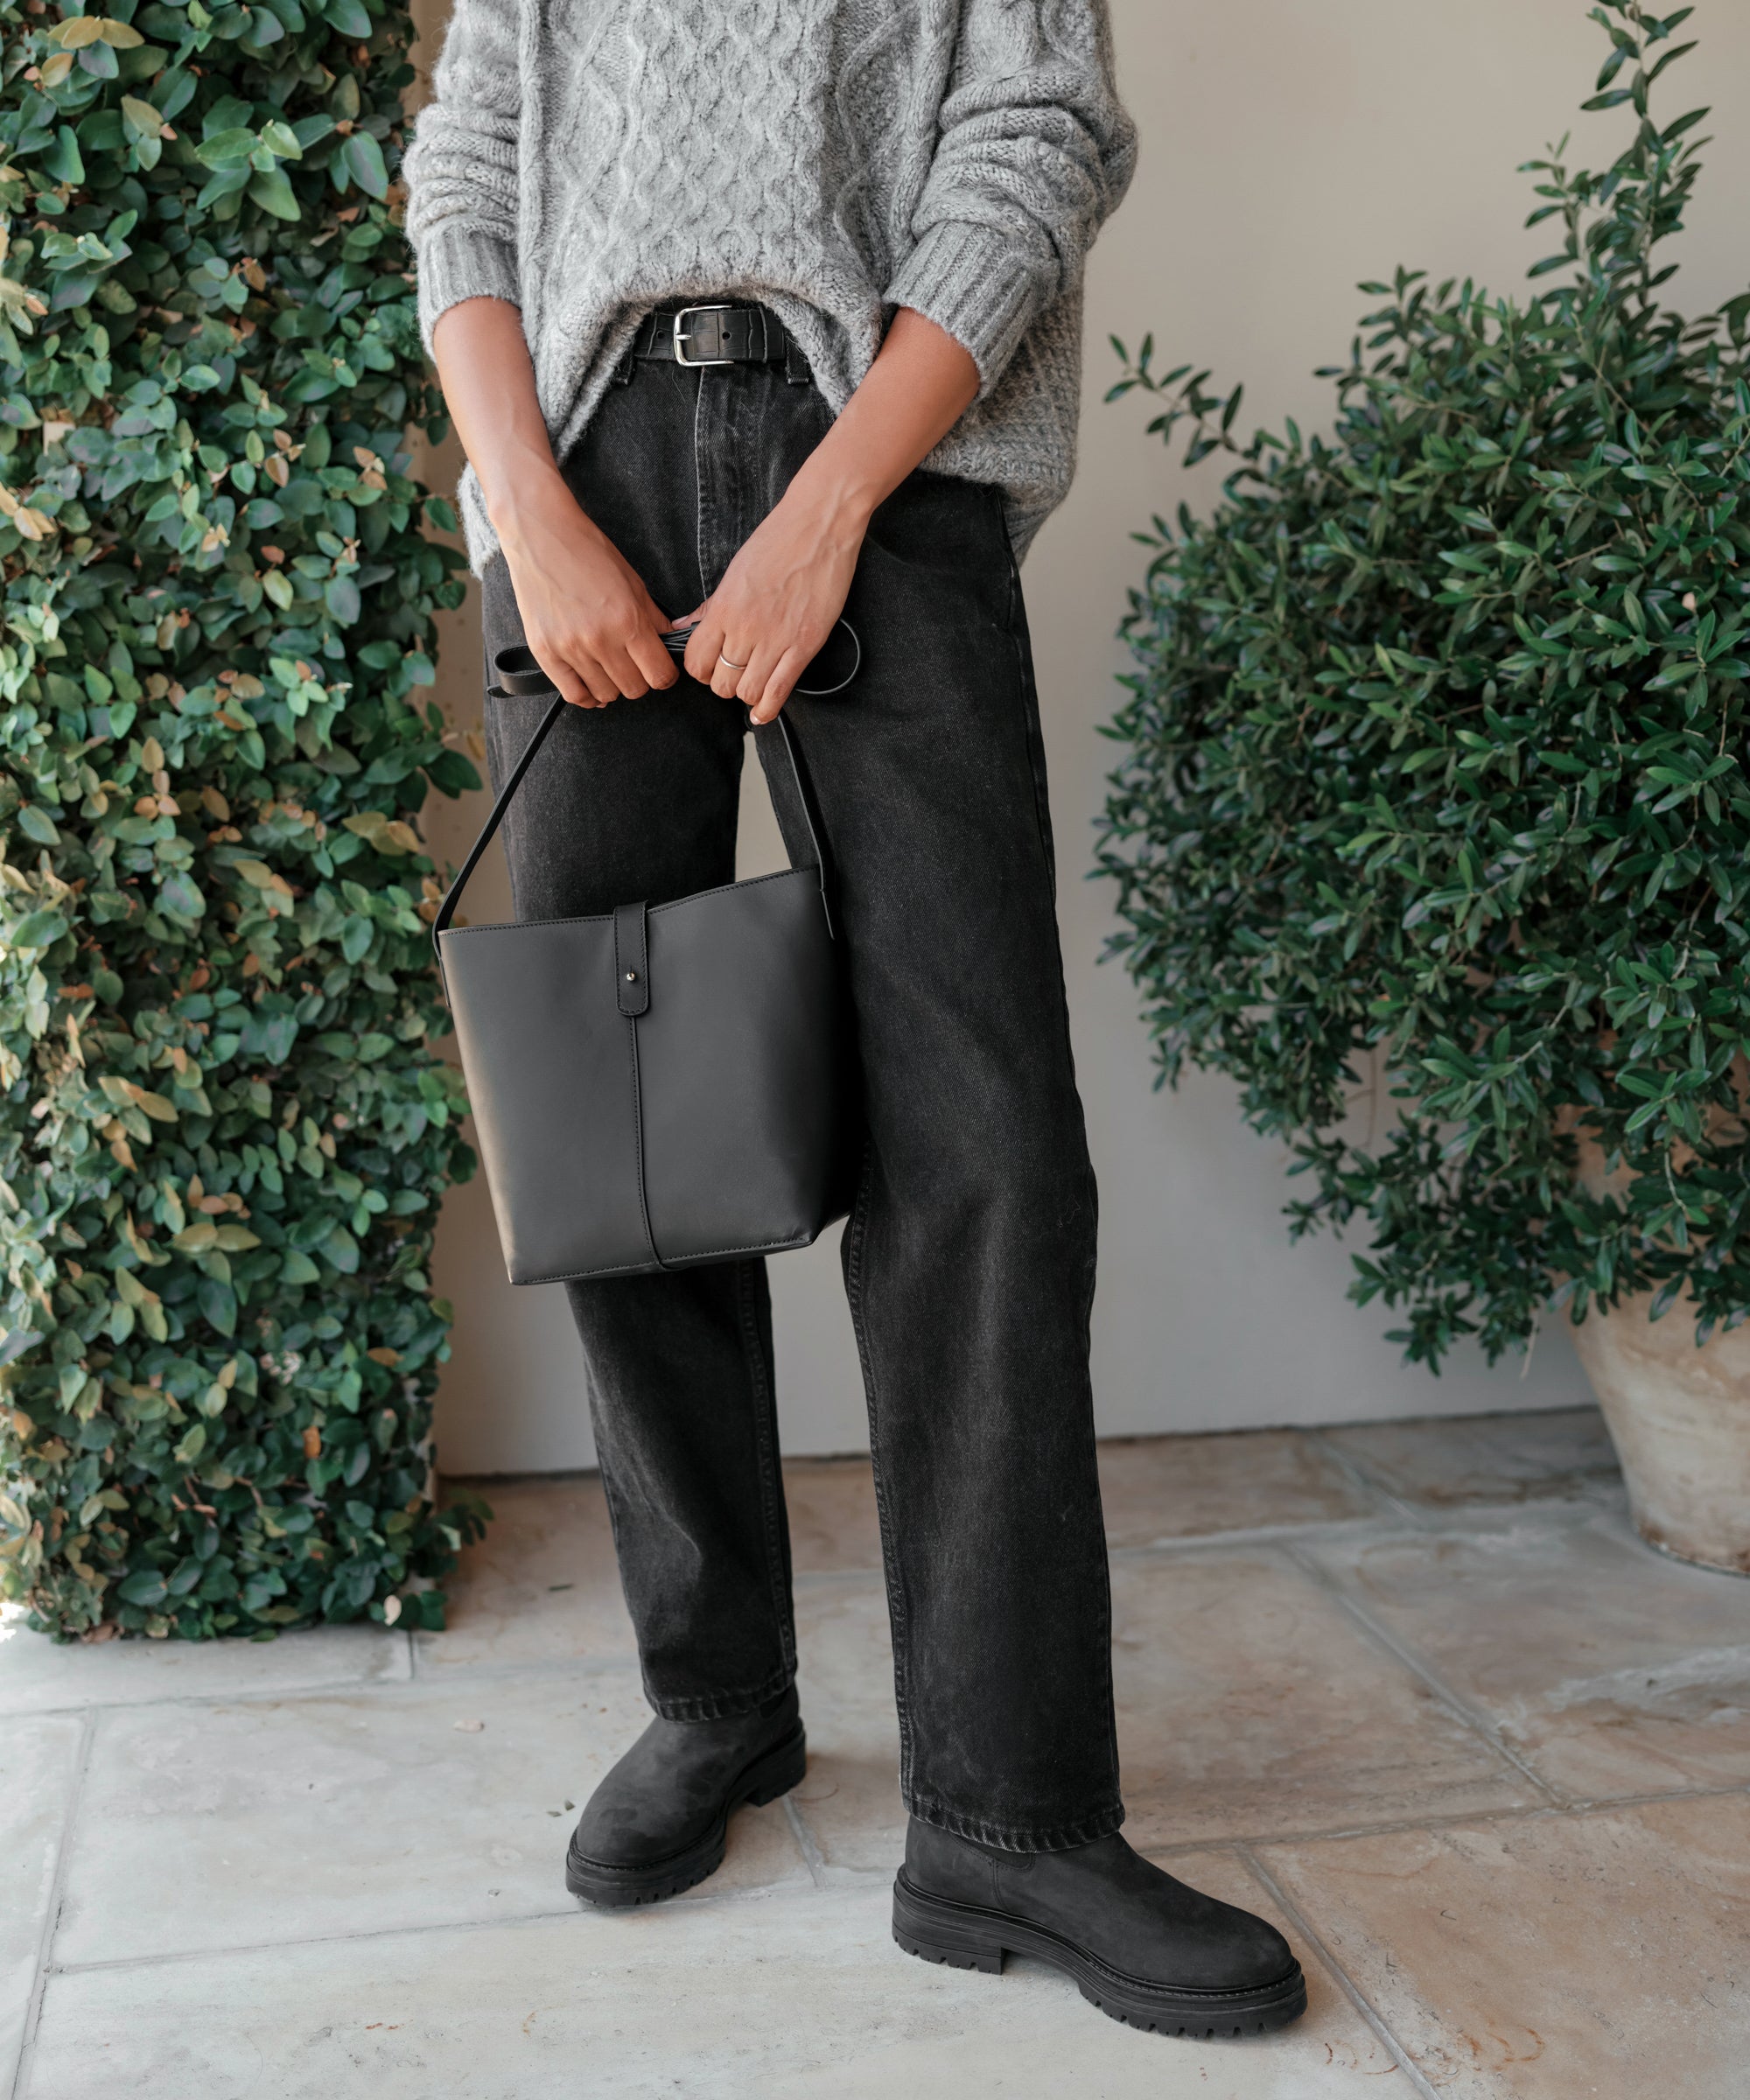 Jenni Kayne Leather Bucket Bag